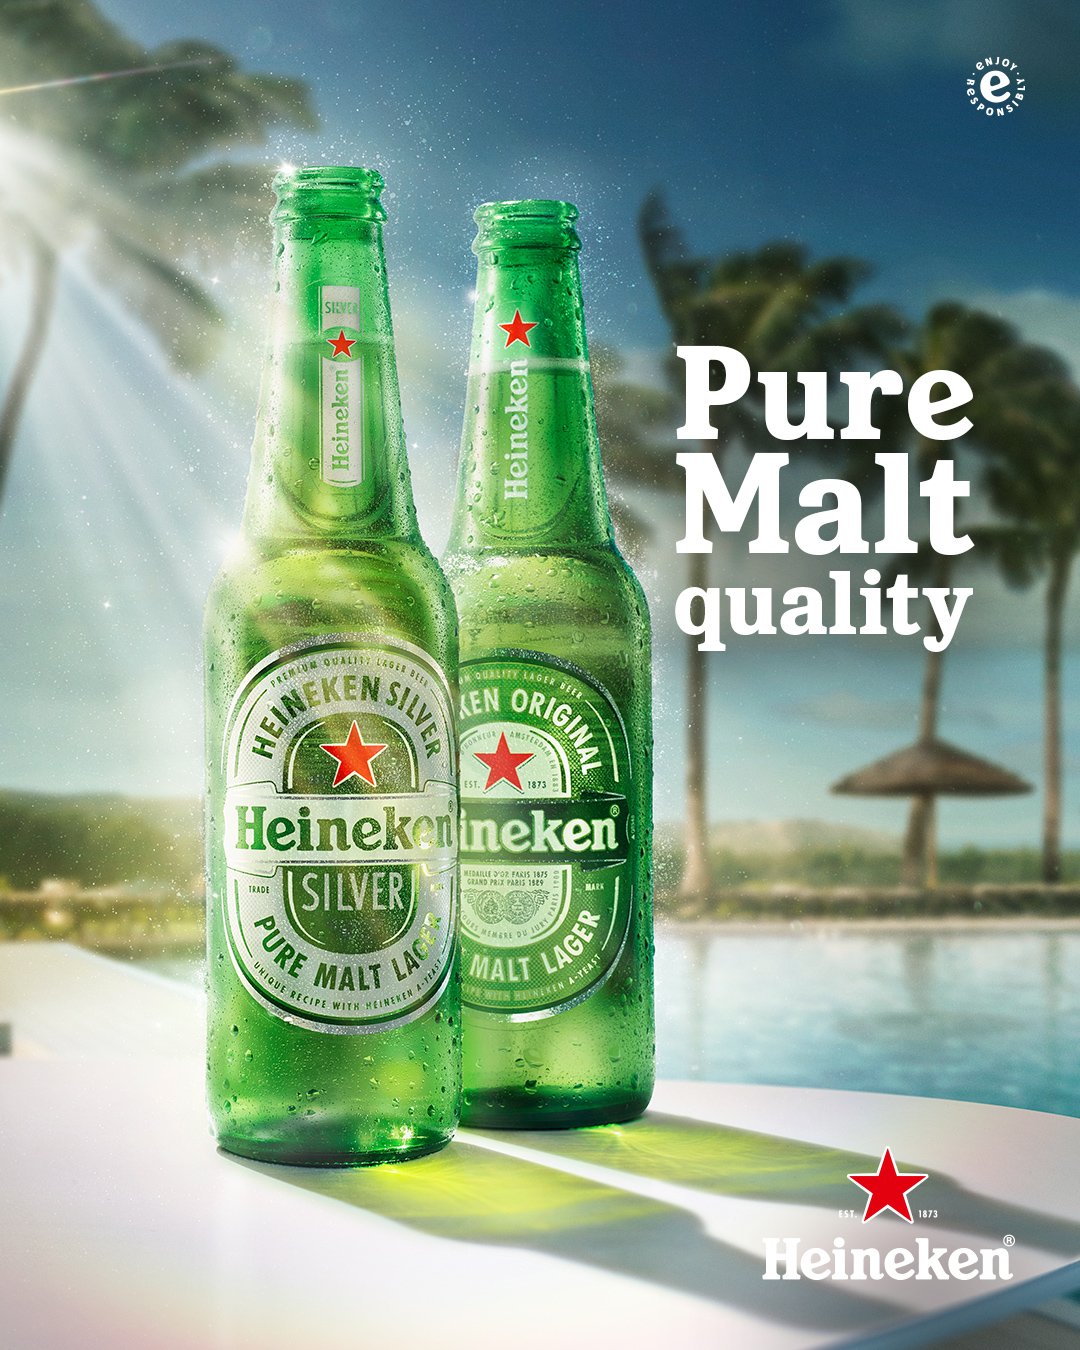 Heineken_Always On_Pure Malt_Pool_Silver-Original_NT_Still_4x5_Digital_Global.jpg